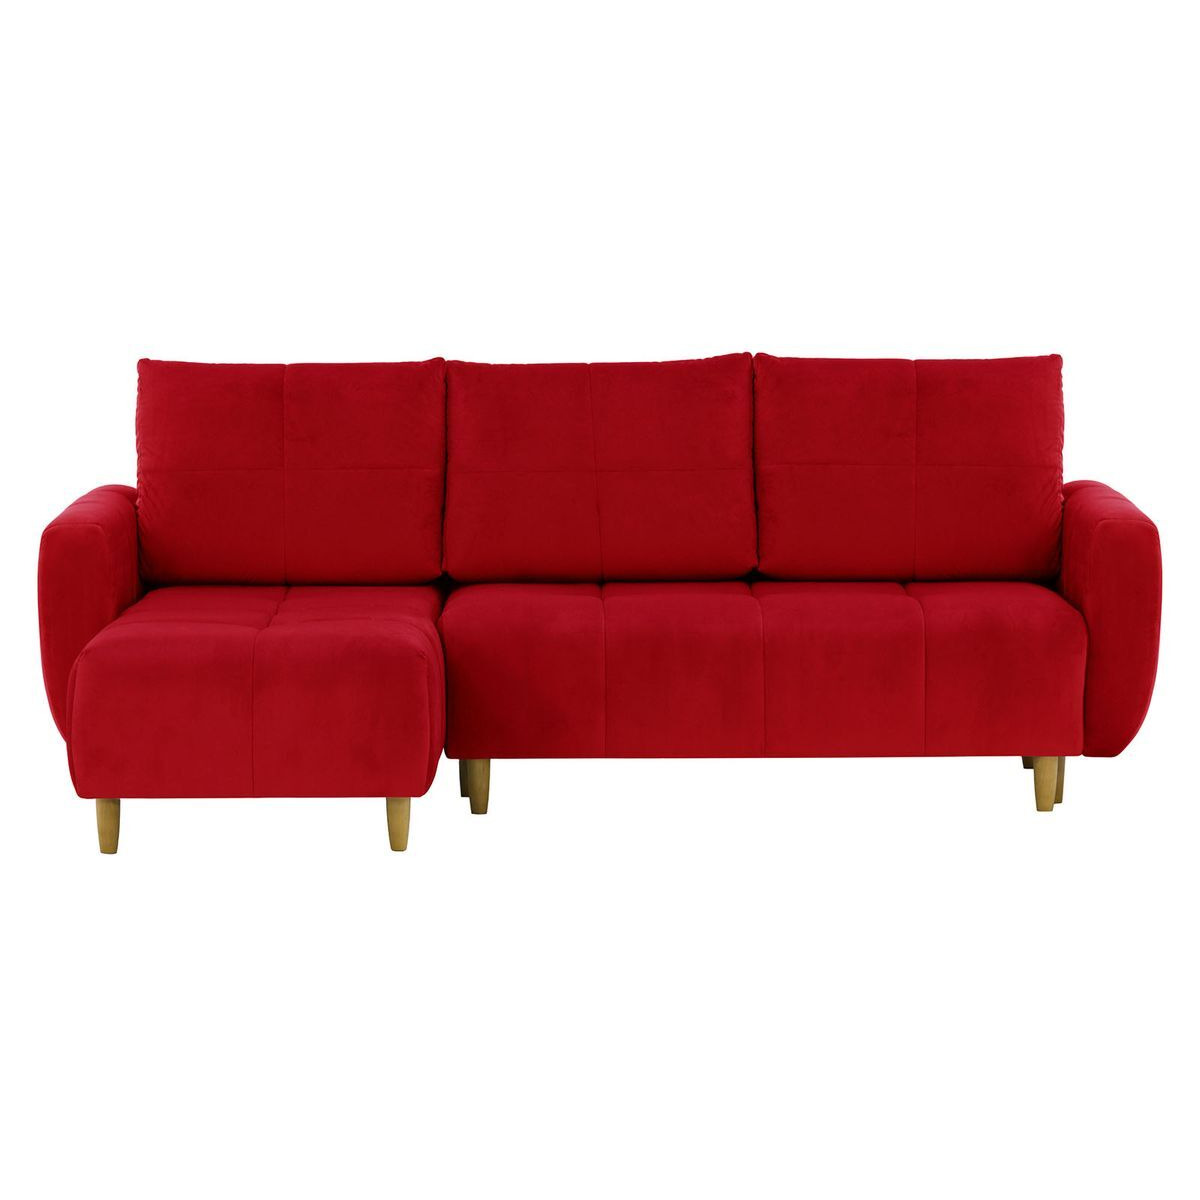 Globe Corner Sofa Bed, dark red - image 1